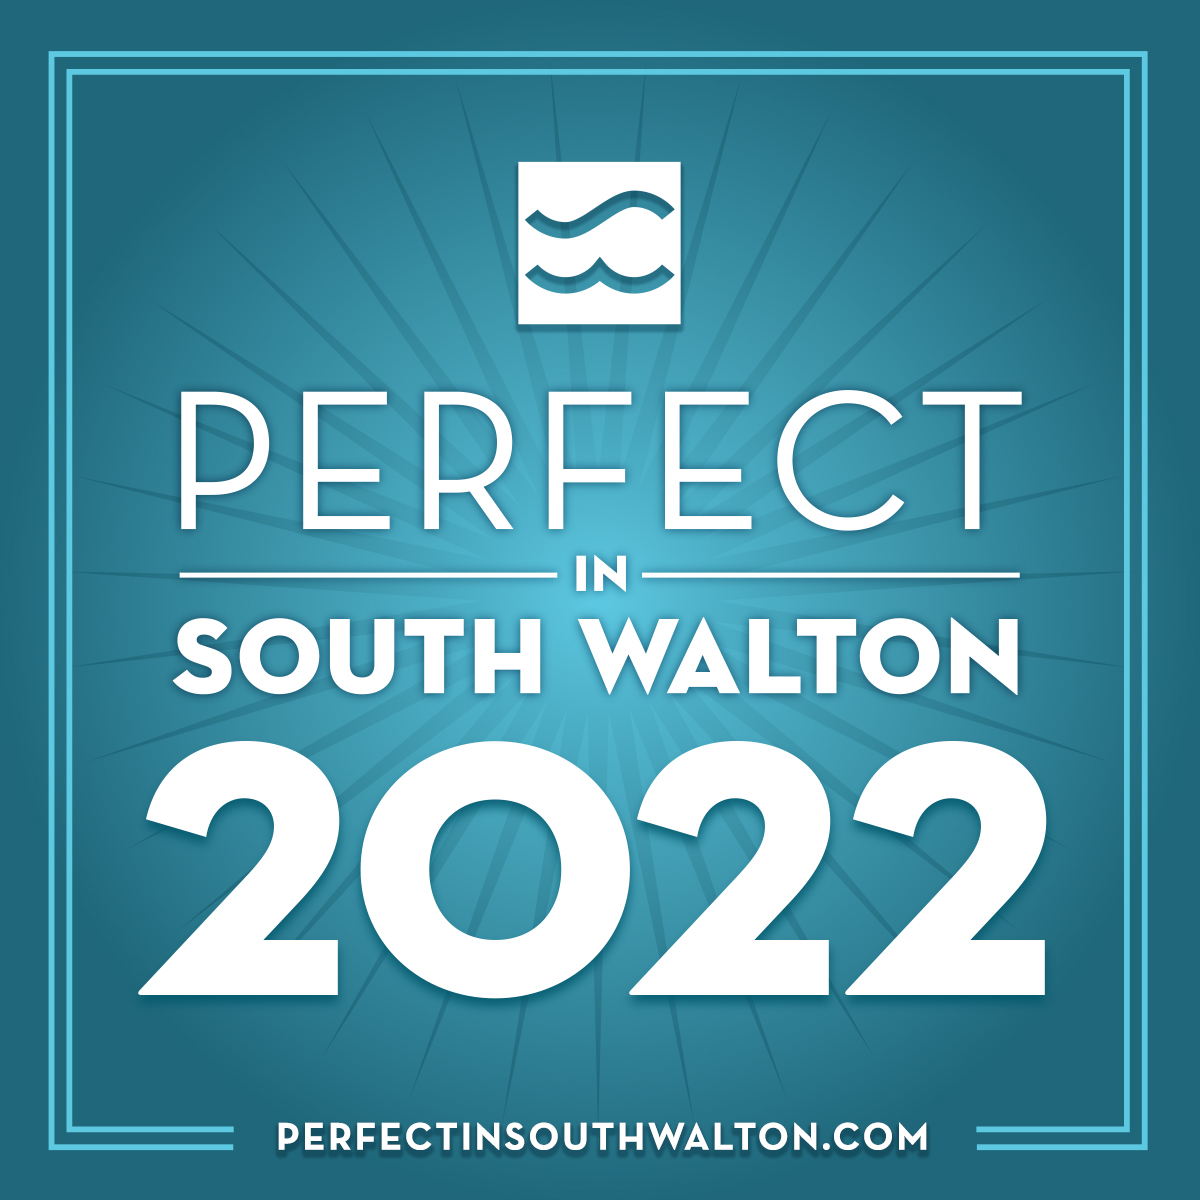 Perfect in South Walton 2022